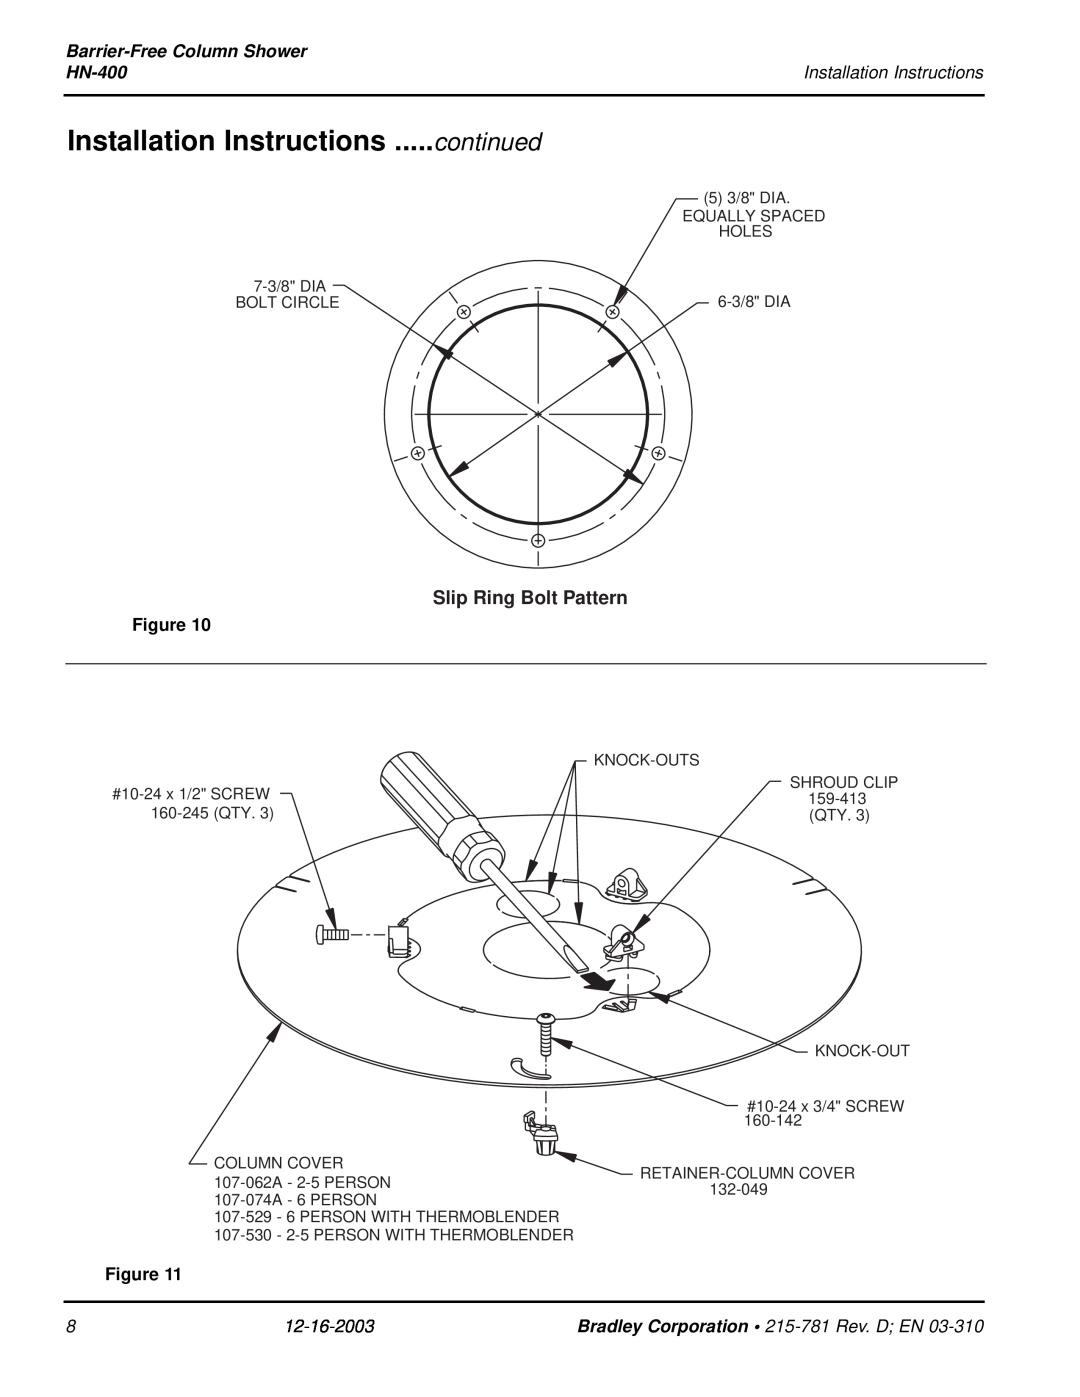 Bradley Smoker HN-400 Installation Instructions .....continued, Slip Ring Bolt Pattern, Barrier-FreeColumn Shower 